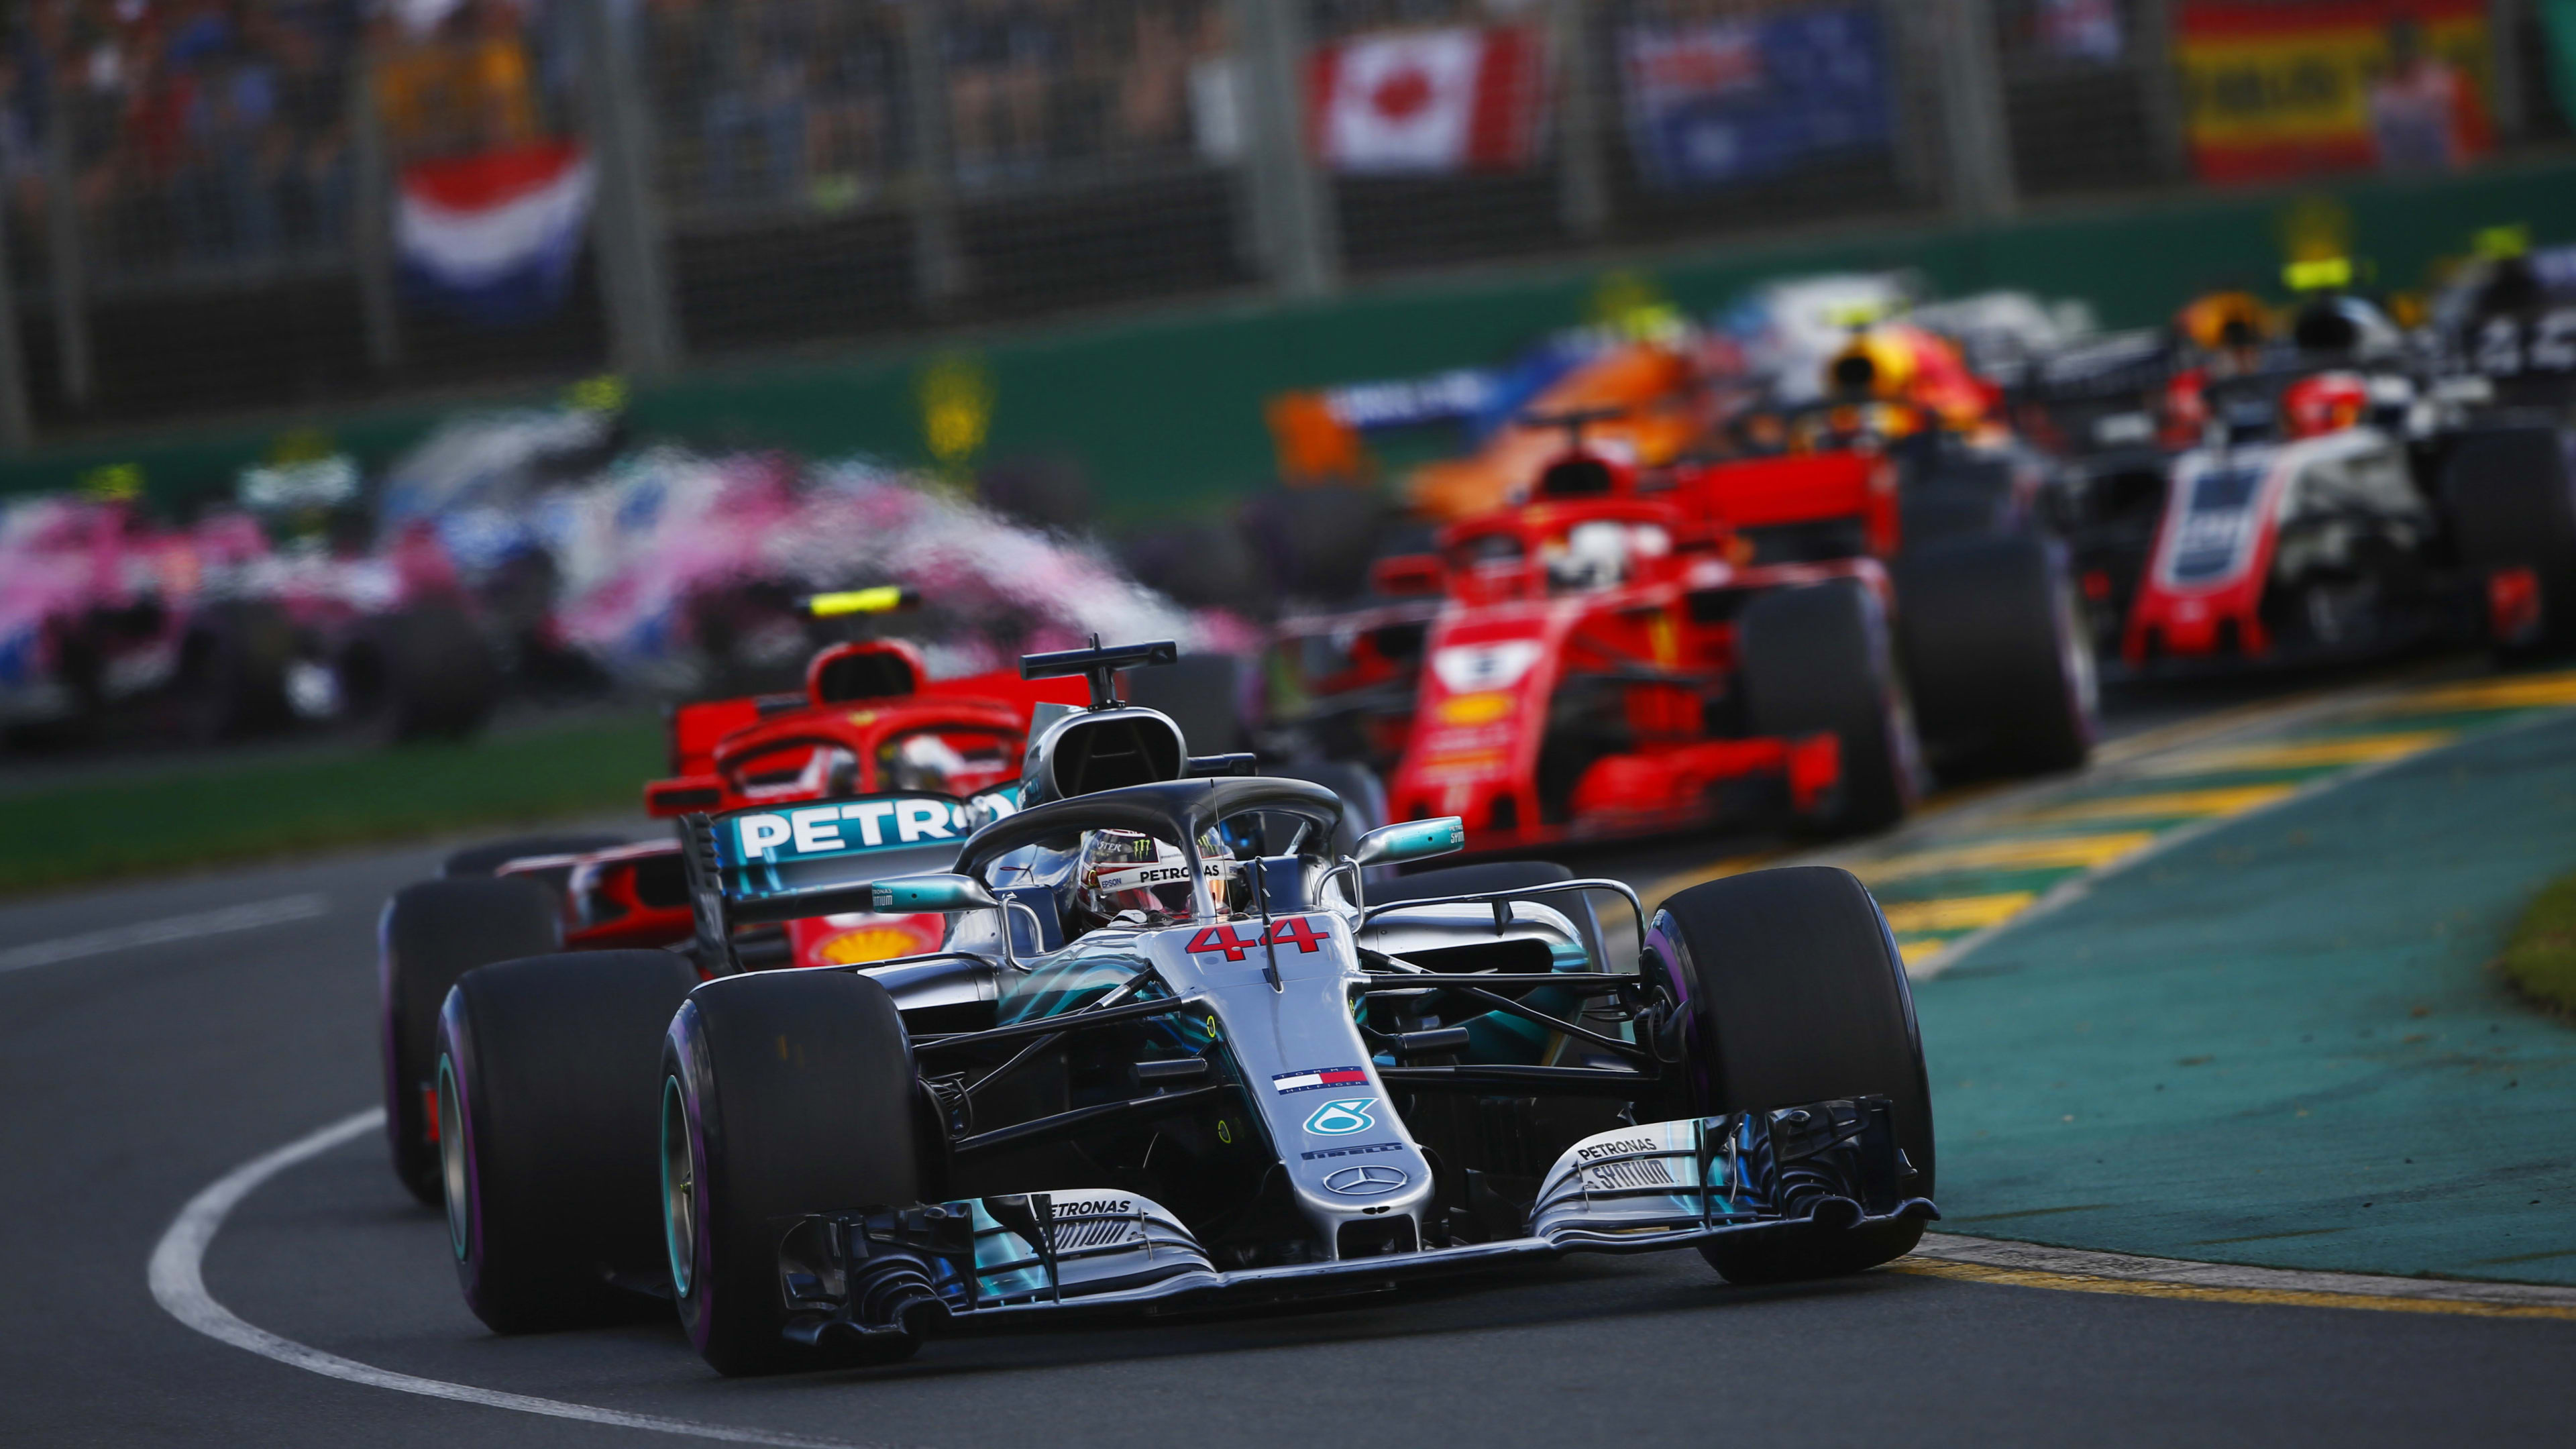 F1 2019 season: Session start times for all 21 Grands Prix this season | Formula 1Â®